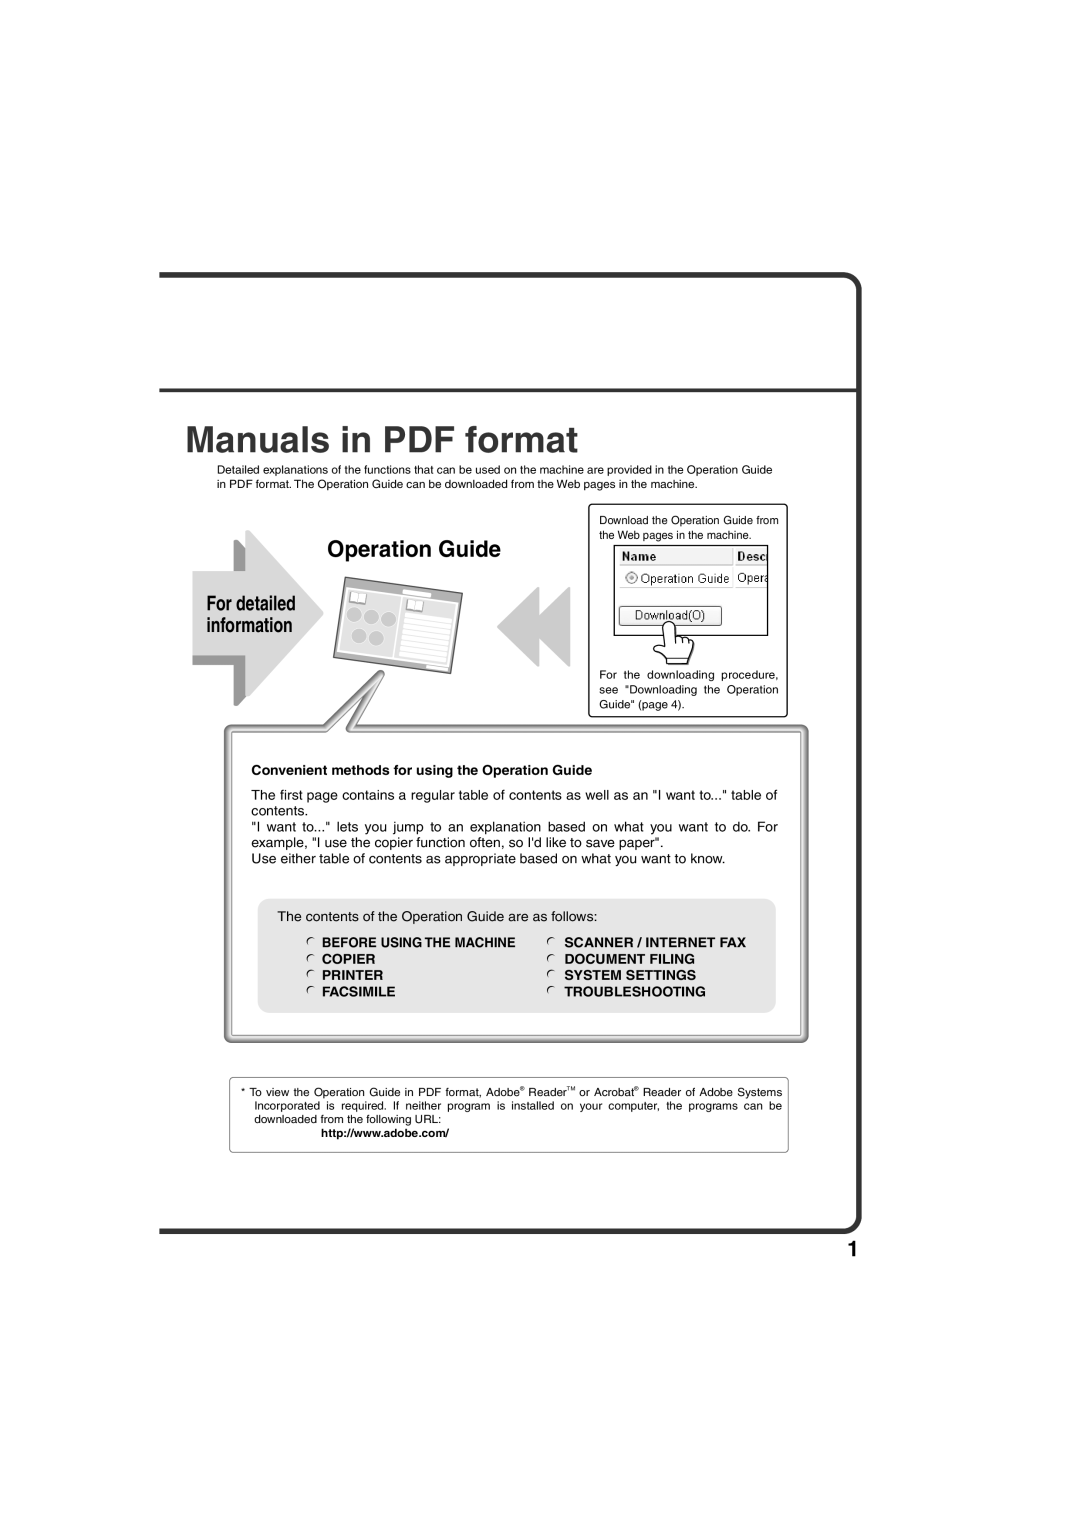 Sharp MX-C381, MX-C311 quick start Manuals in PDF format, Operation Guide 